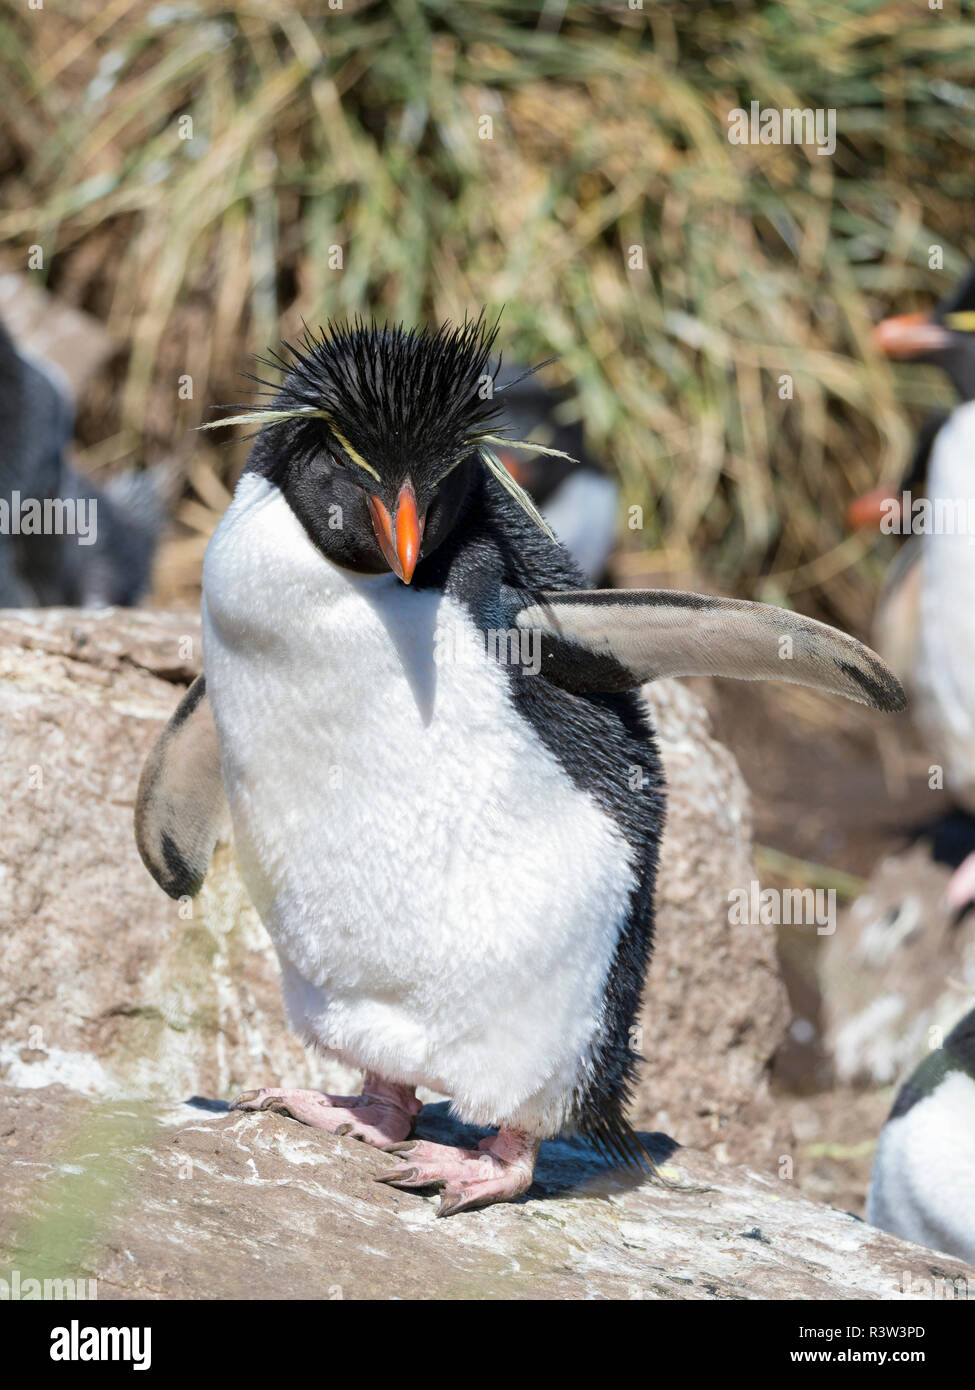 Rockhopper Penguin (Eudyptes chrysocome chrysocome), Unterarten western Rockhopper penguin (Eudyptes chrysocome). Südamerika, Falkland Inseln. Stockfoto